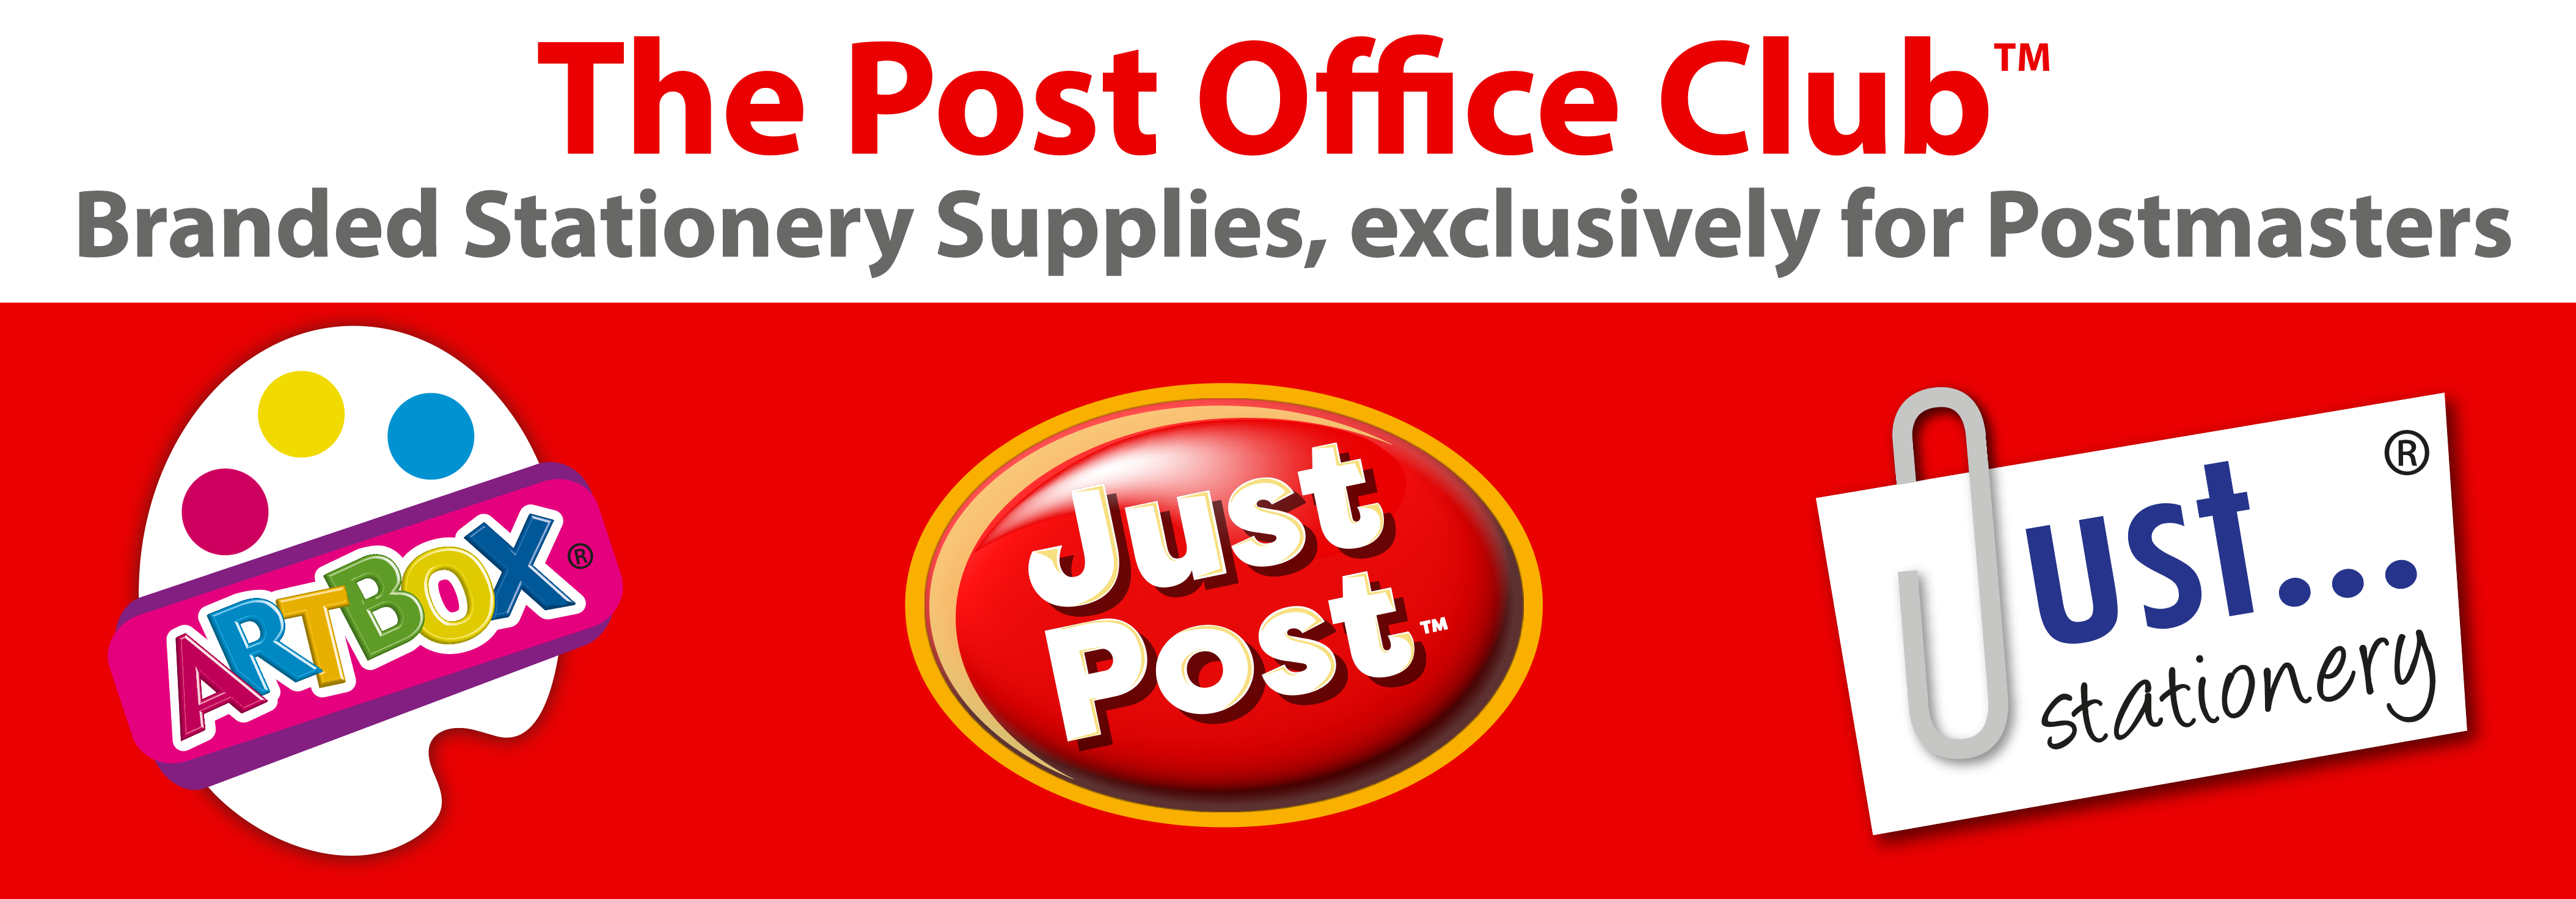 Postmasters site coming soon!